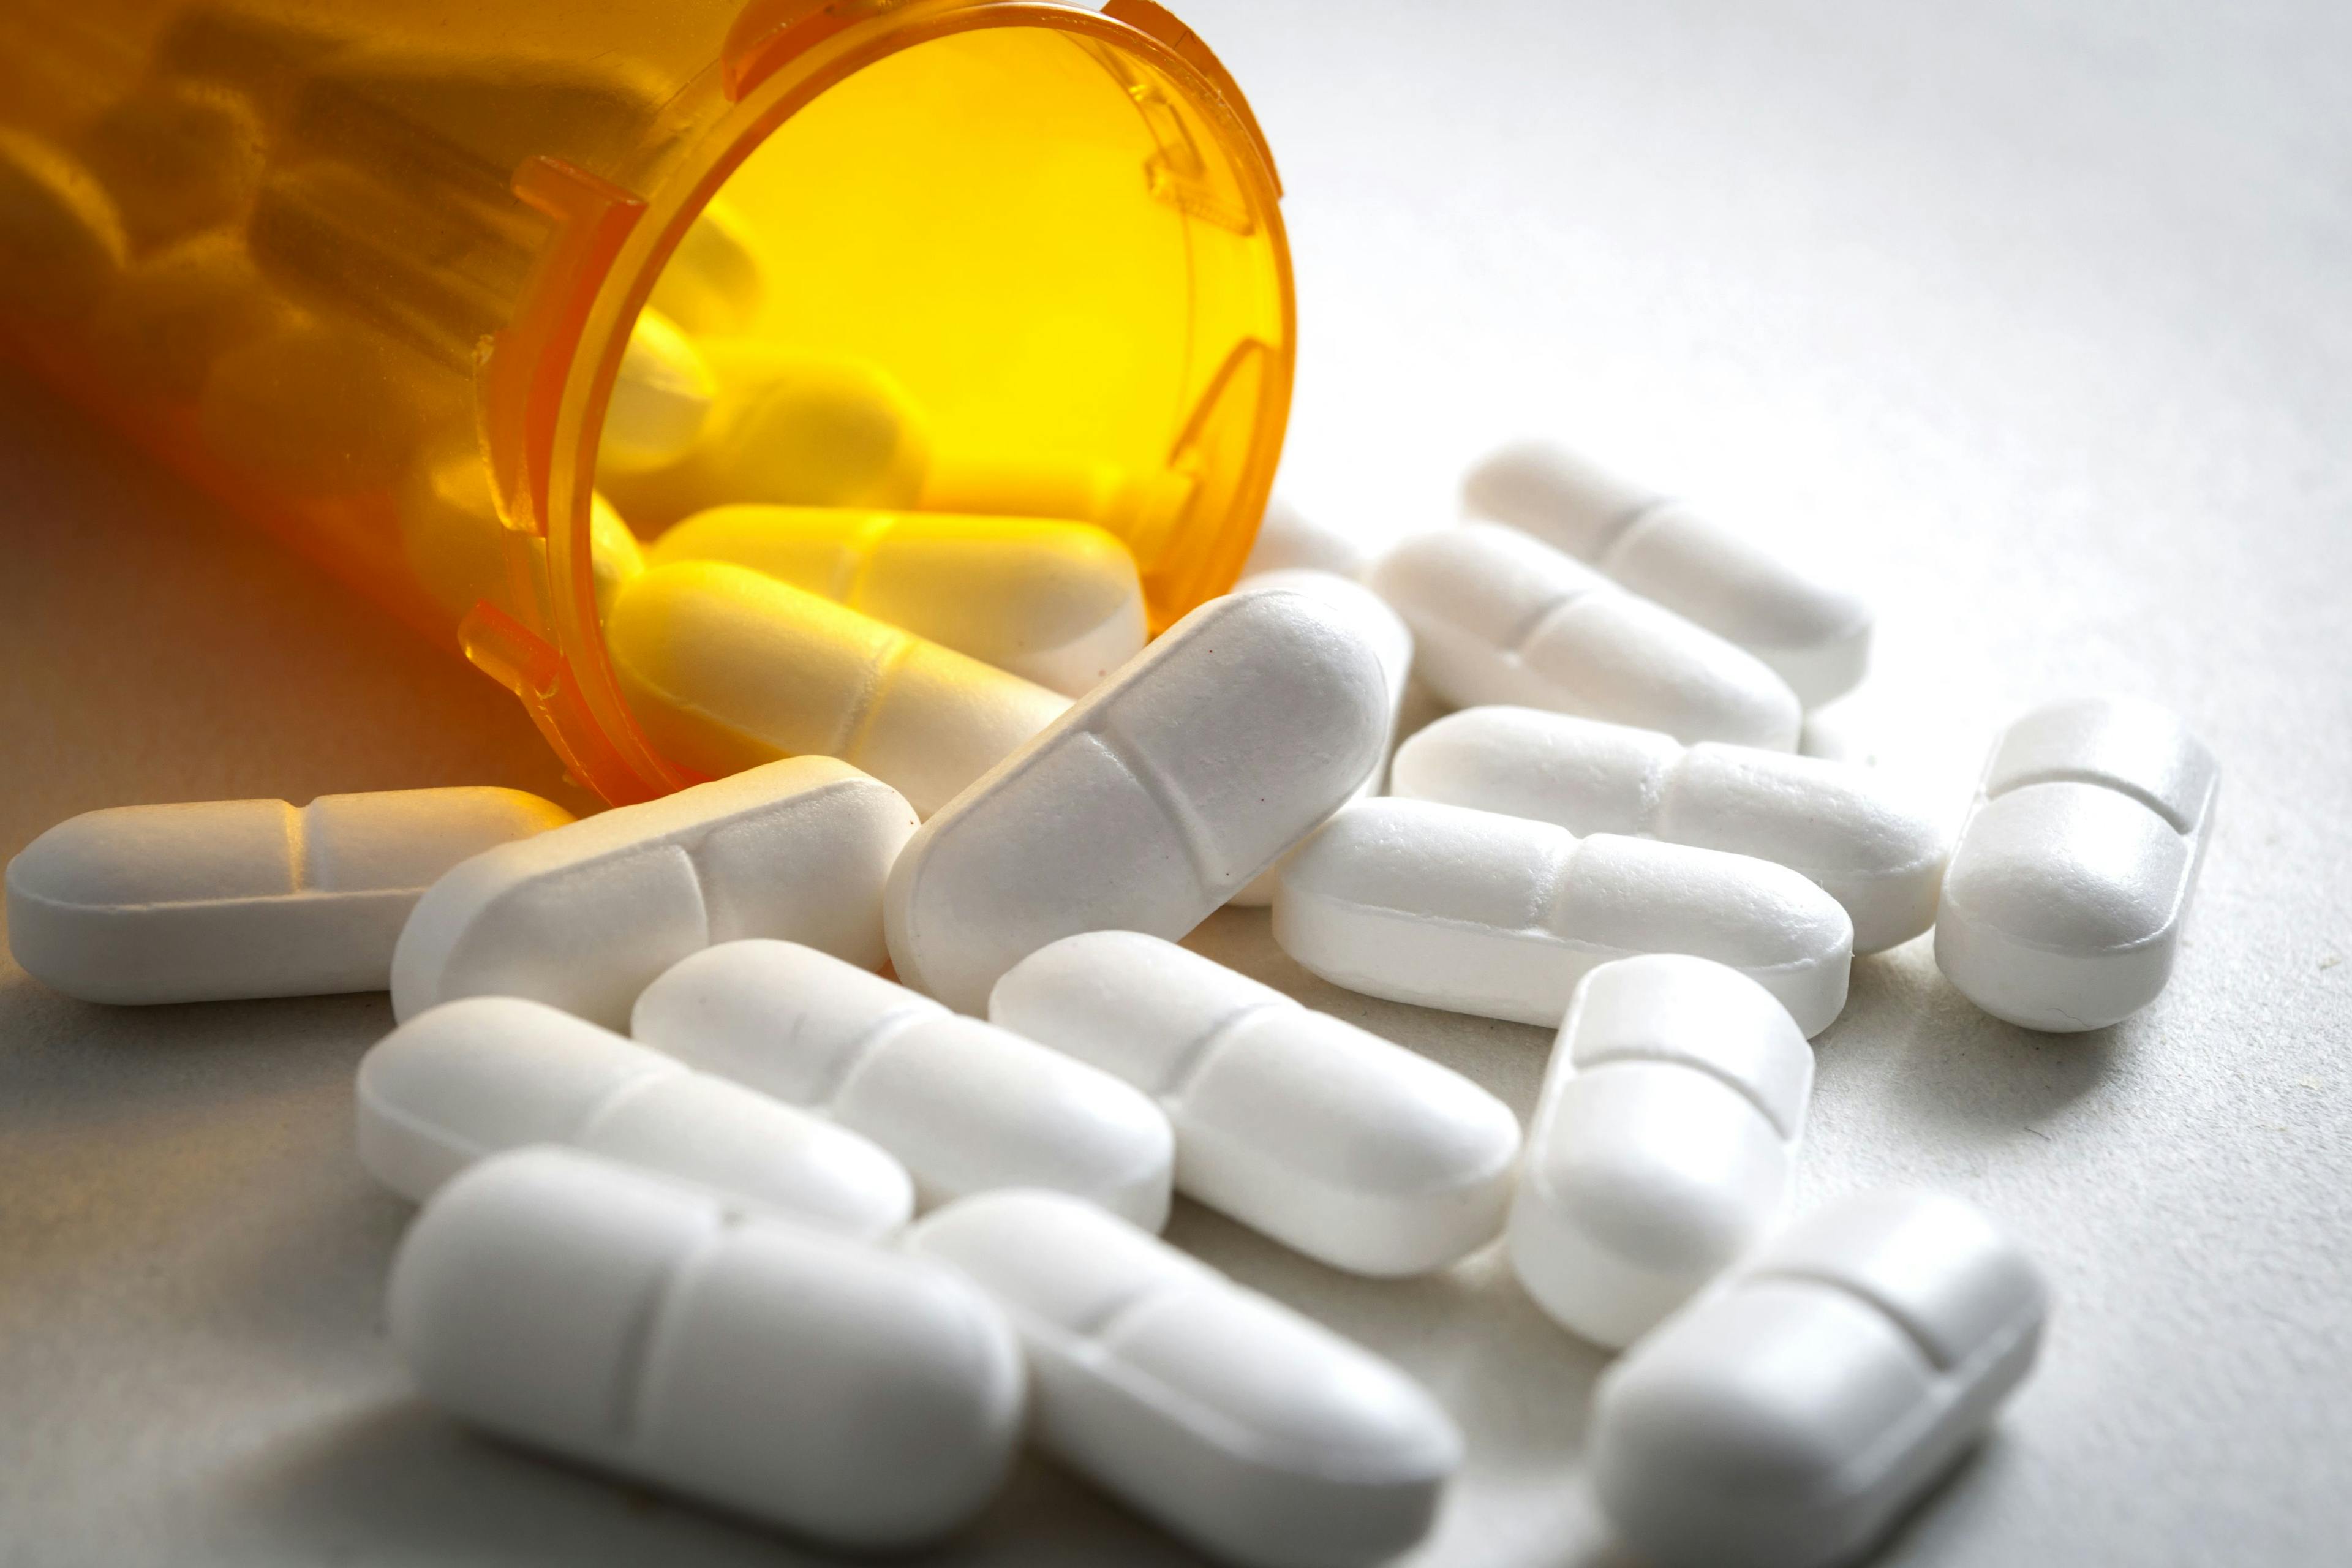 Alternative Chronic Pain Management Options to Help Battle the Opioid Epidemic